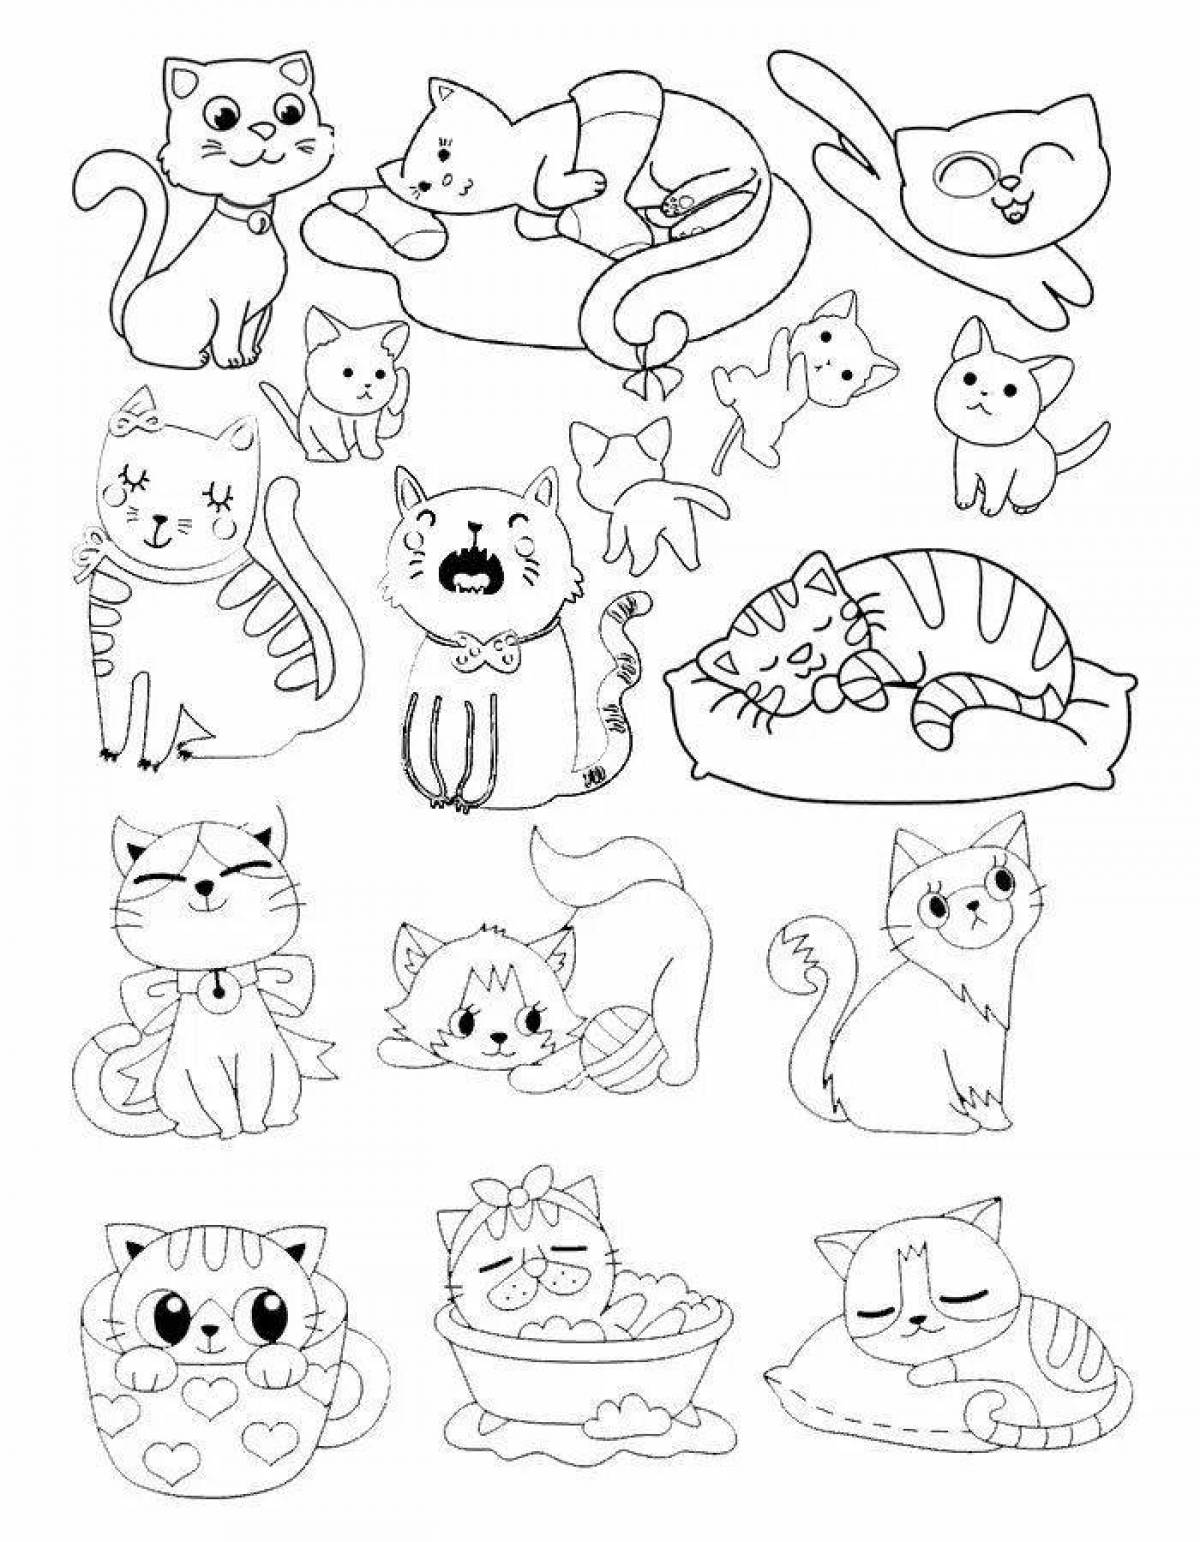 Playful cute cat coloring book